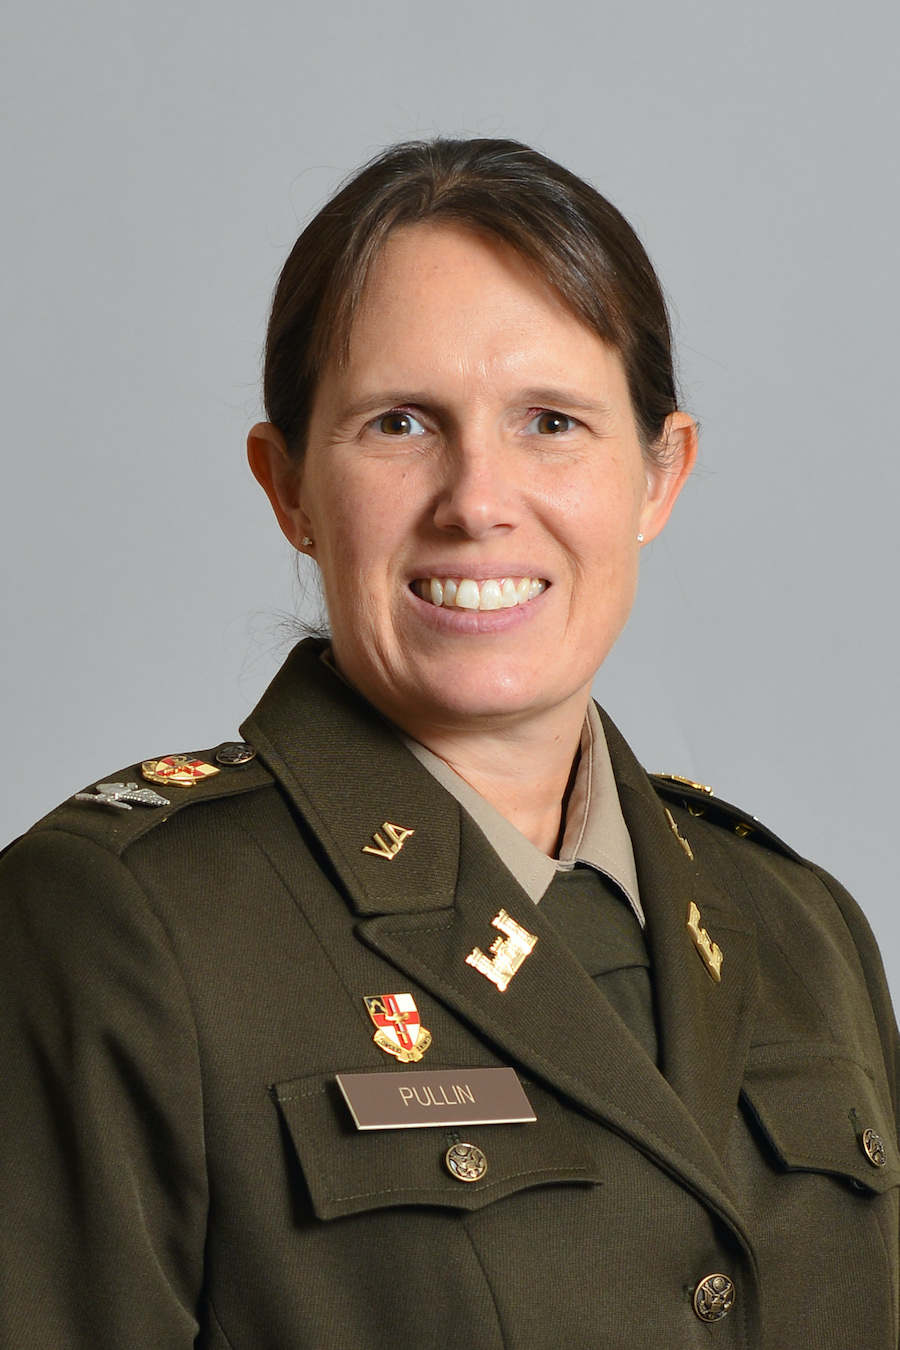 Col. Jennifer E. Pullin, Ph.D.